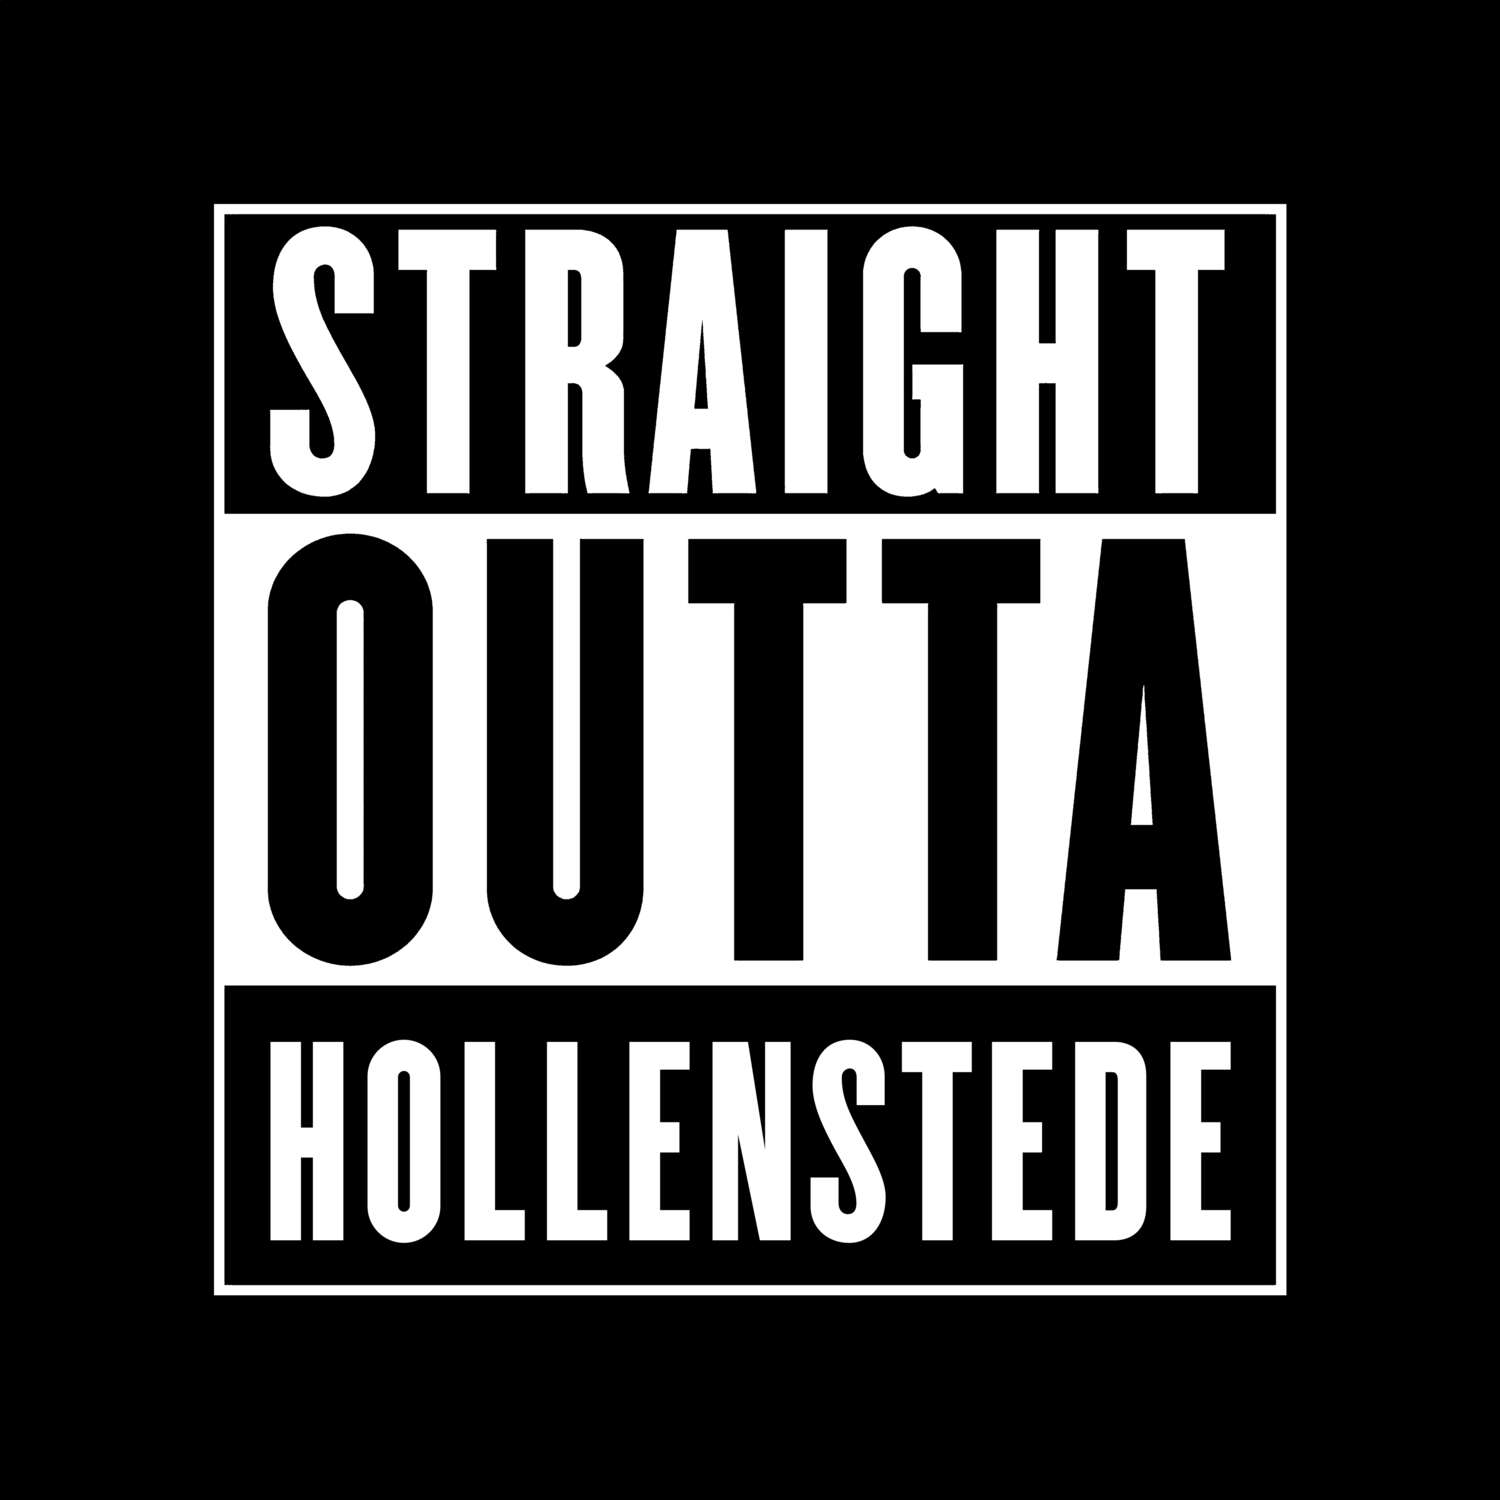 Hollenstede T-Shirt »Straight Outta«